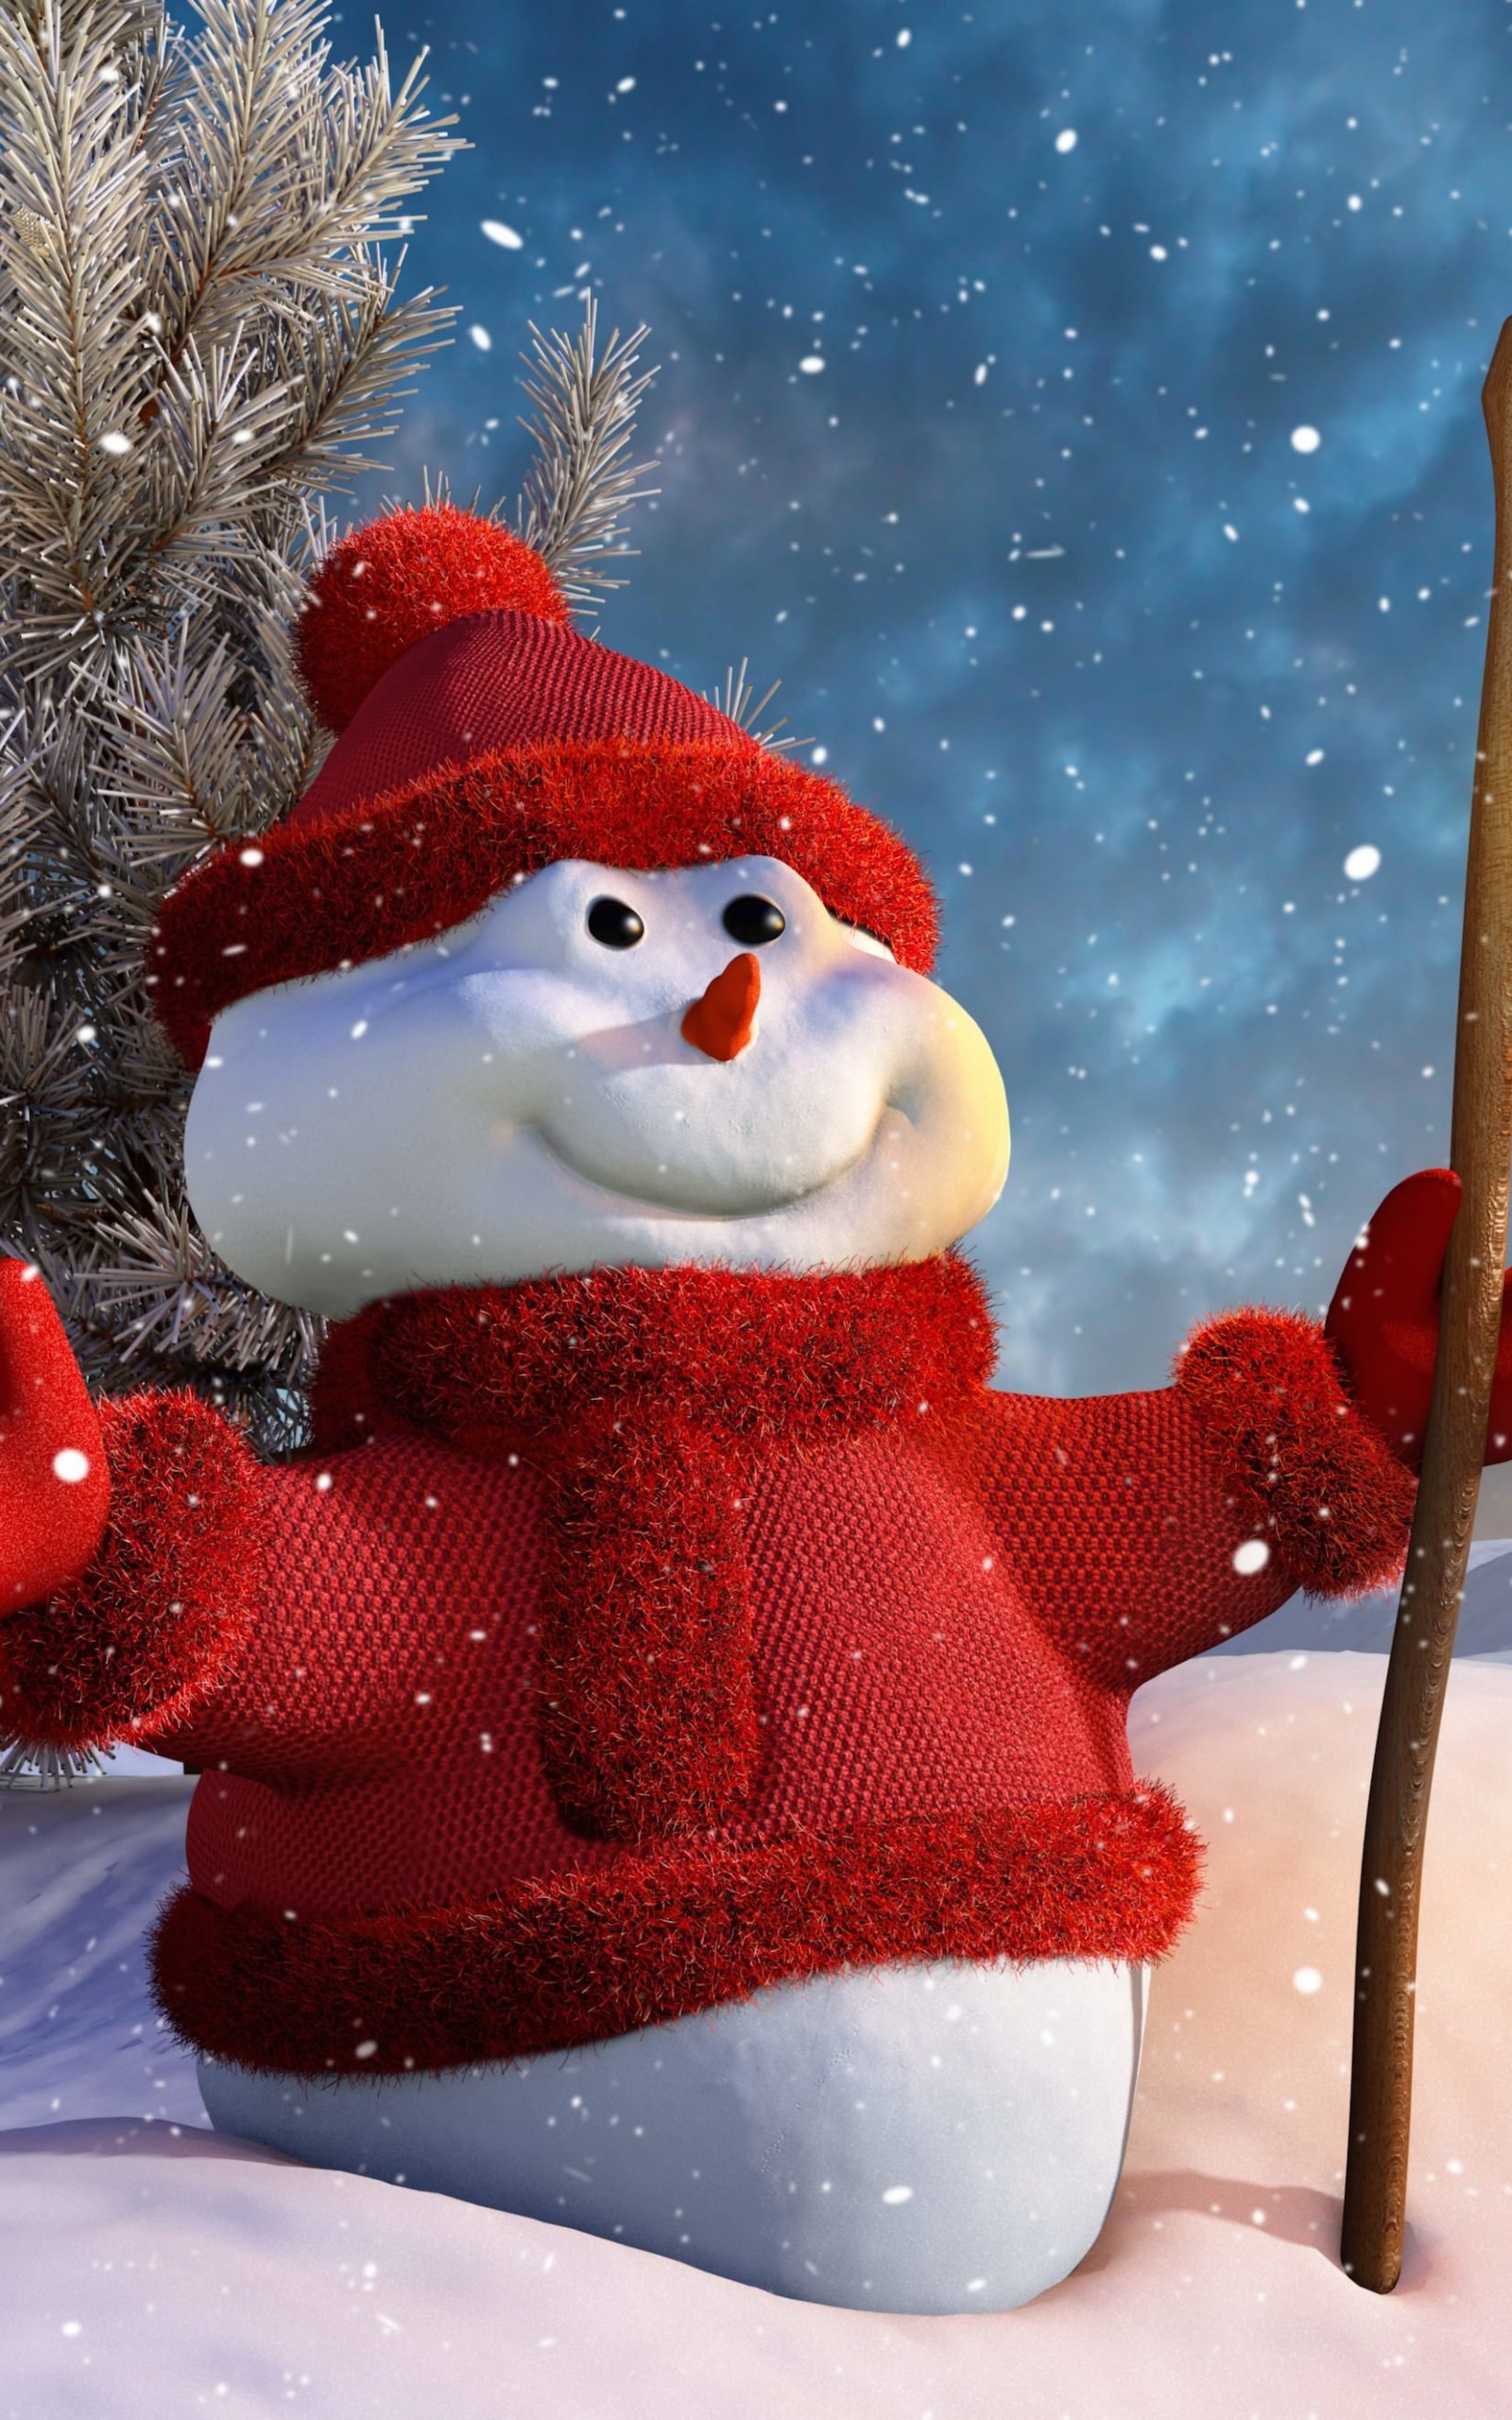 Christmas Snowman Wallpaper for Amazon Kindle Fire HDX 8.9